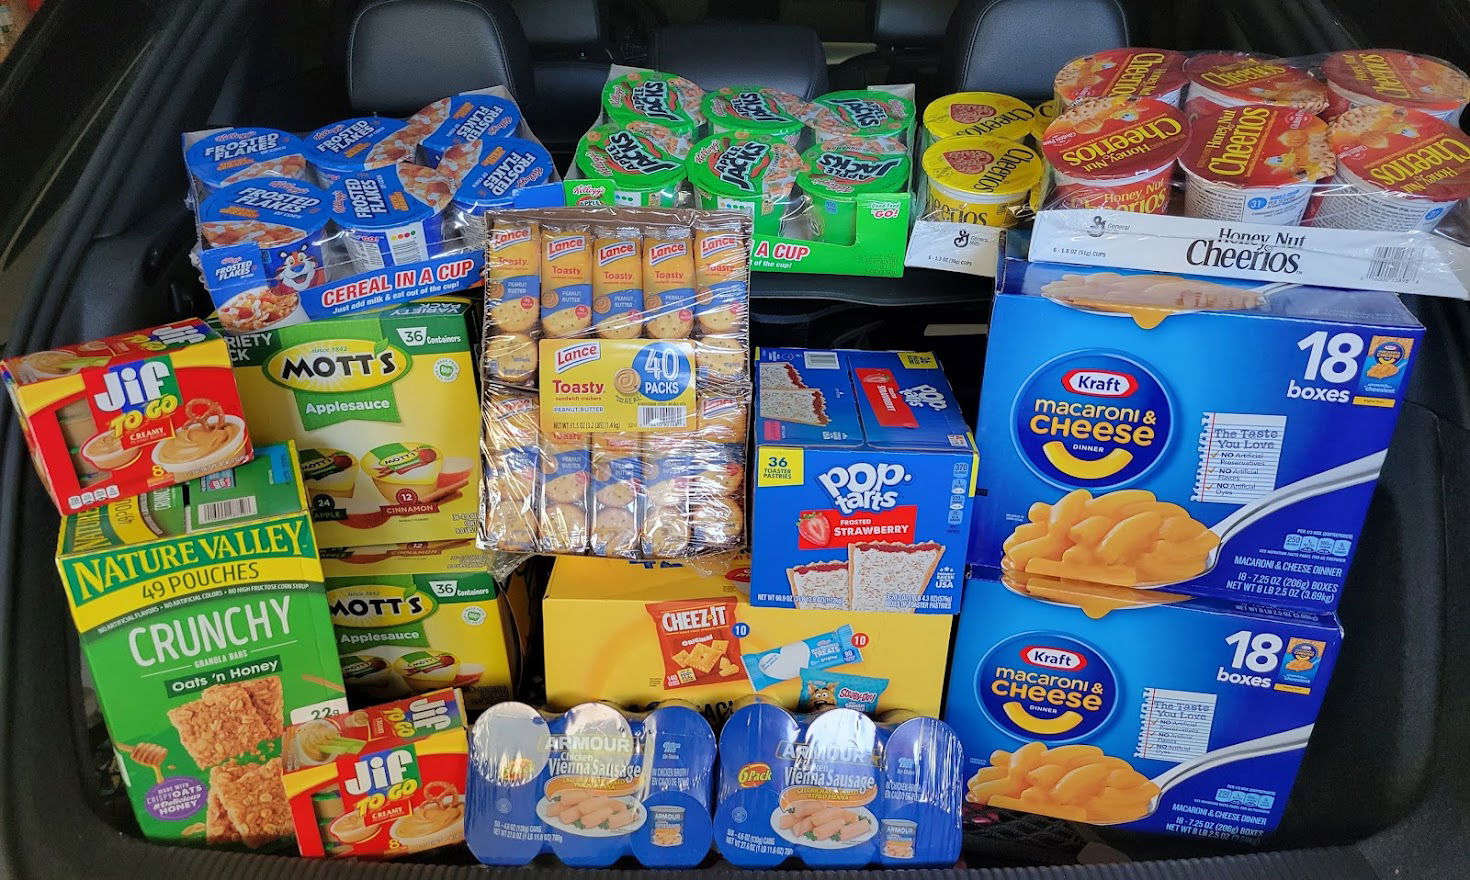 Hollywood Presbyterian Church Donation for Homeless Snack Bags